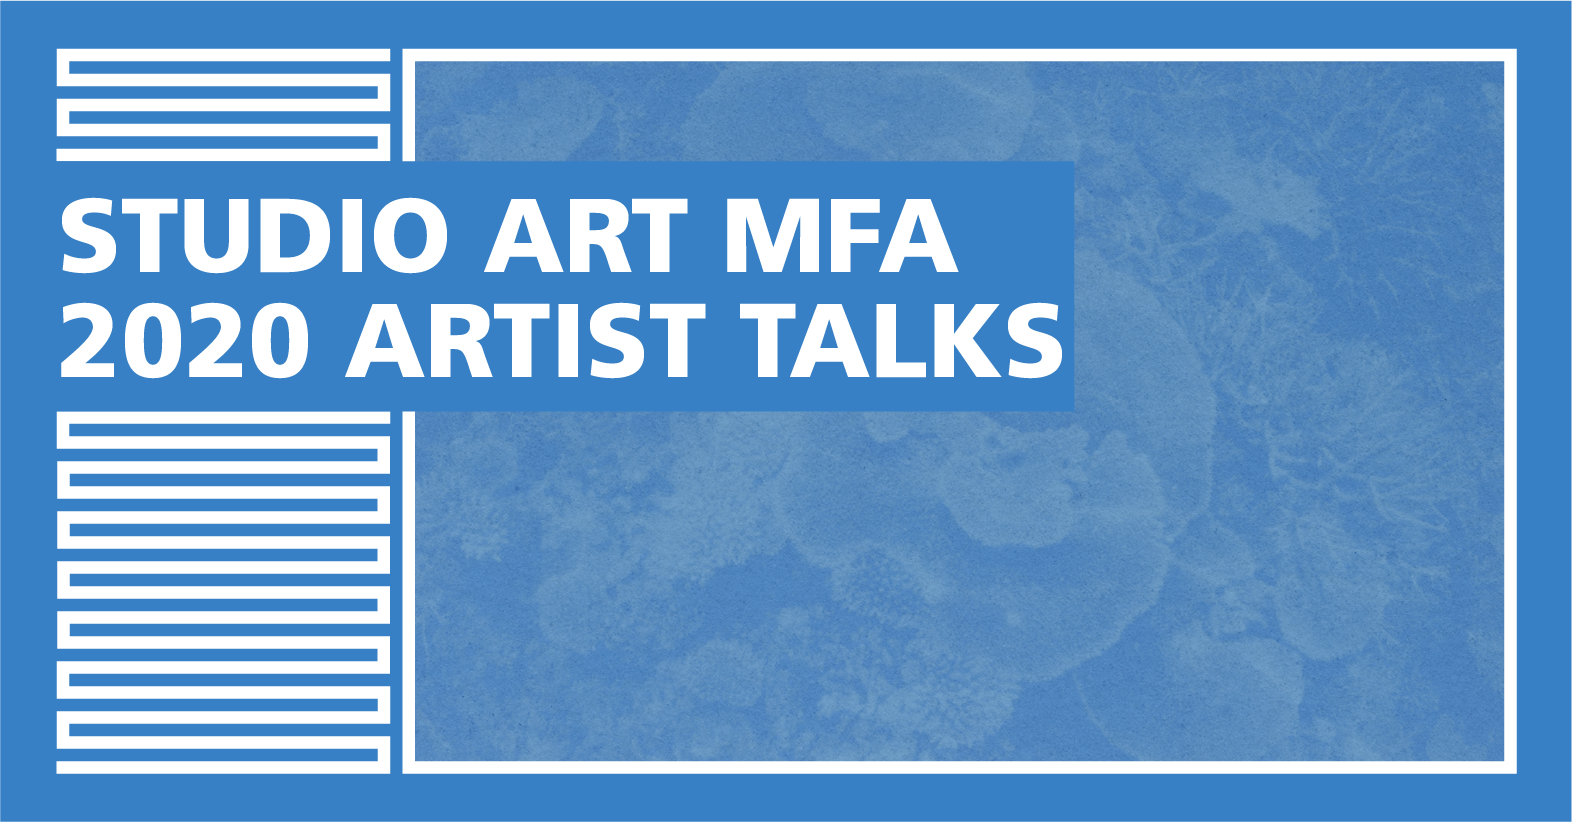 Cover Image for "Studio Art MFA 2020 Artist Talks"